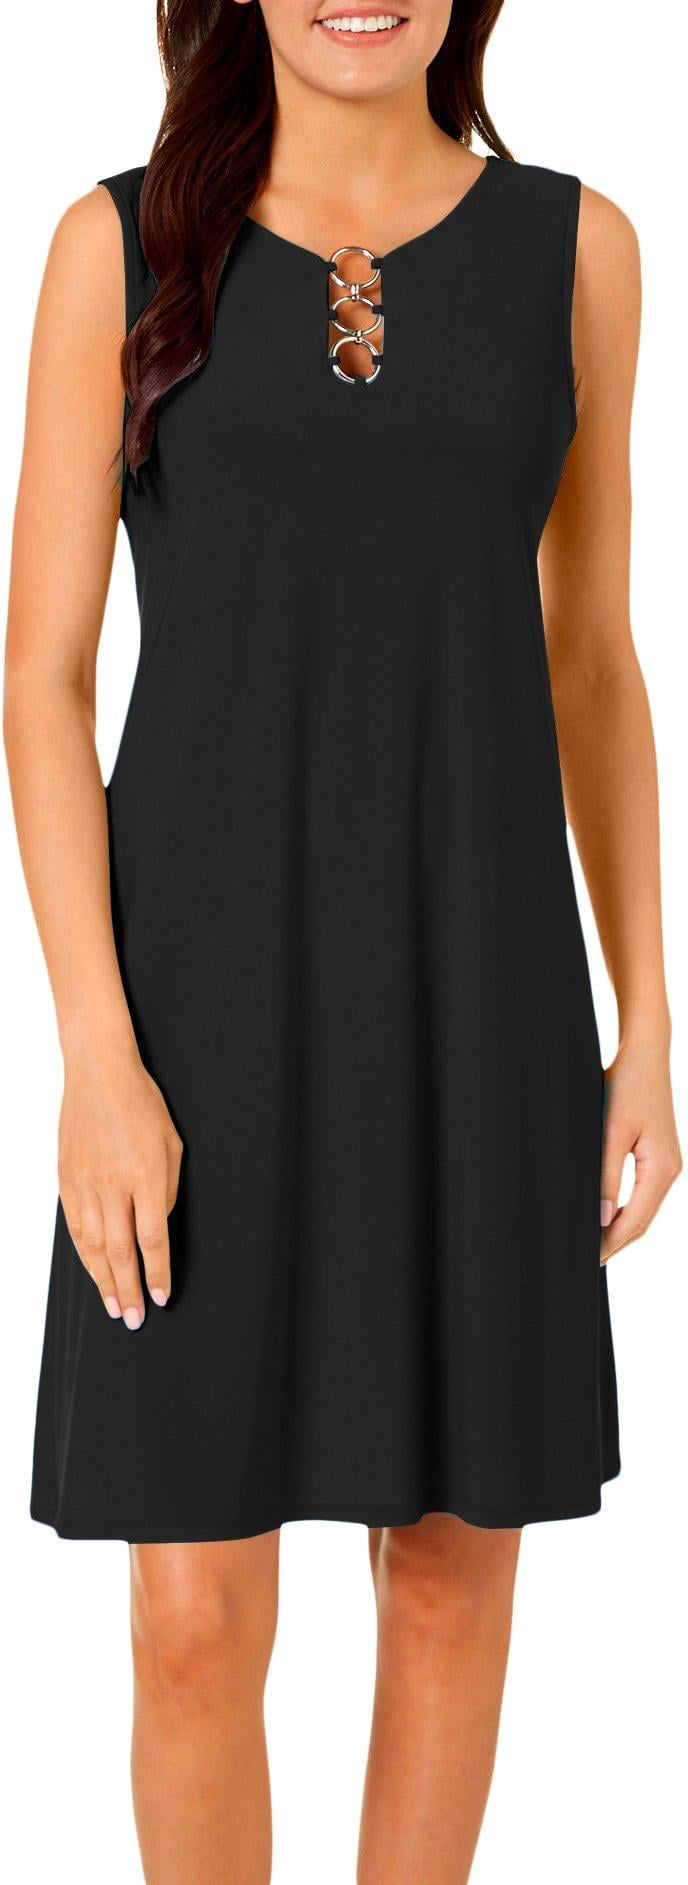 MSK - MSK Womens Solid Ring Neck Sleeveless Dress - Walmart.com ...